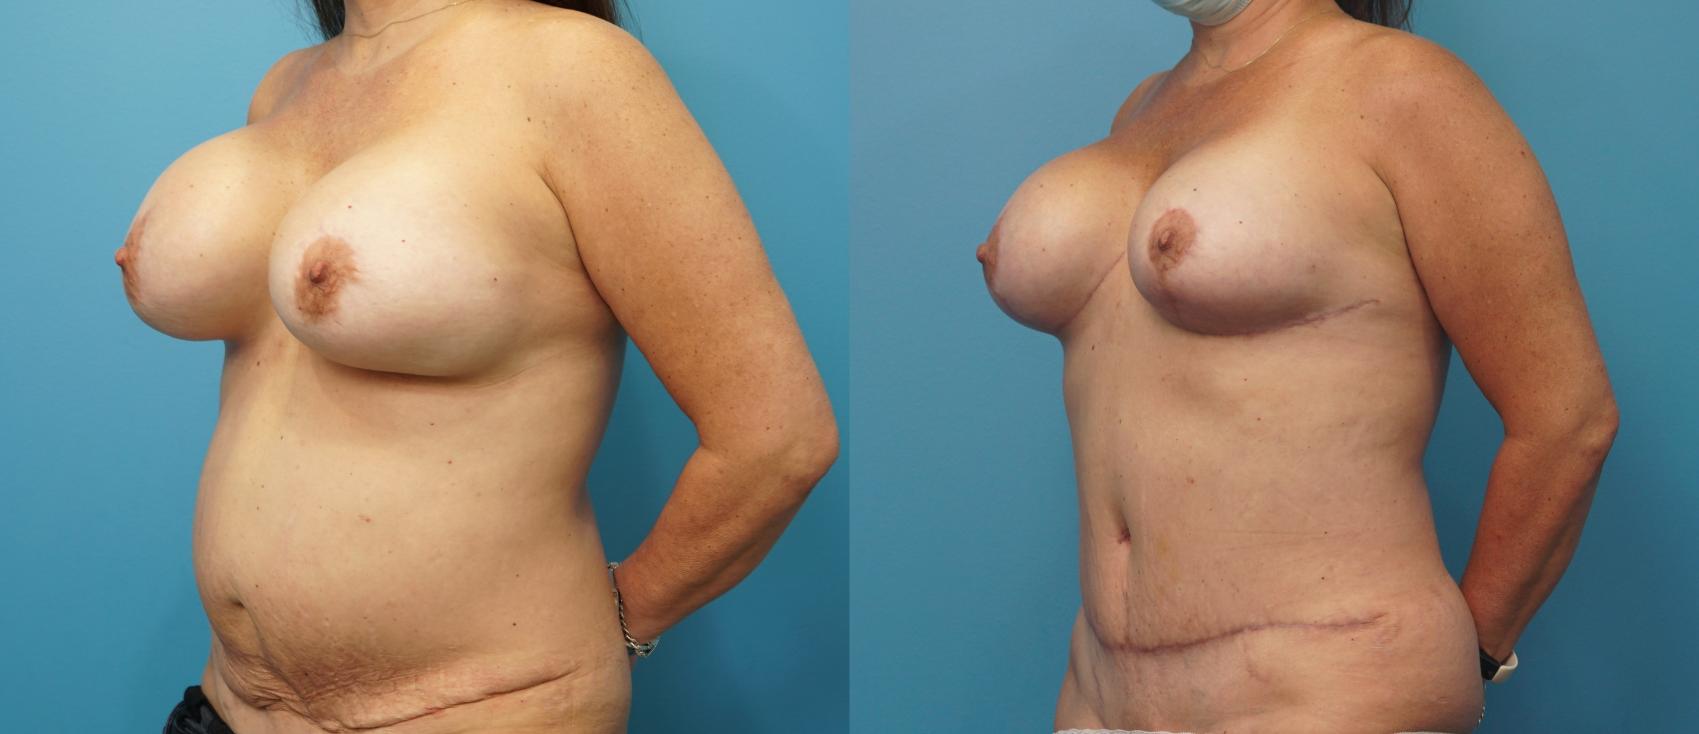 Before & After Abdominoplasty/Tummy Tuck Case 328 Left Oblique View in North Shore, IL